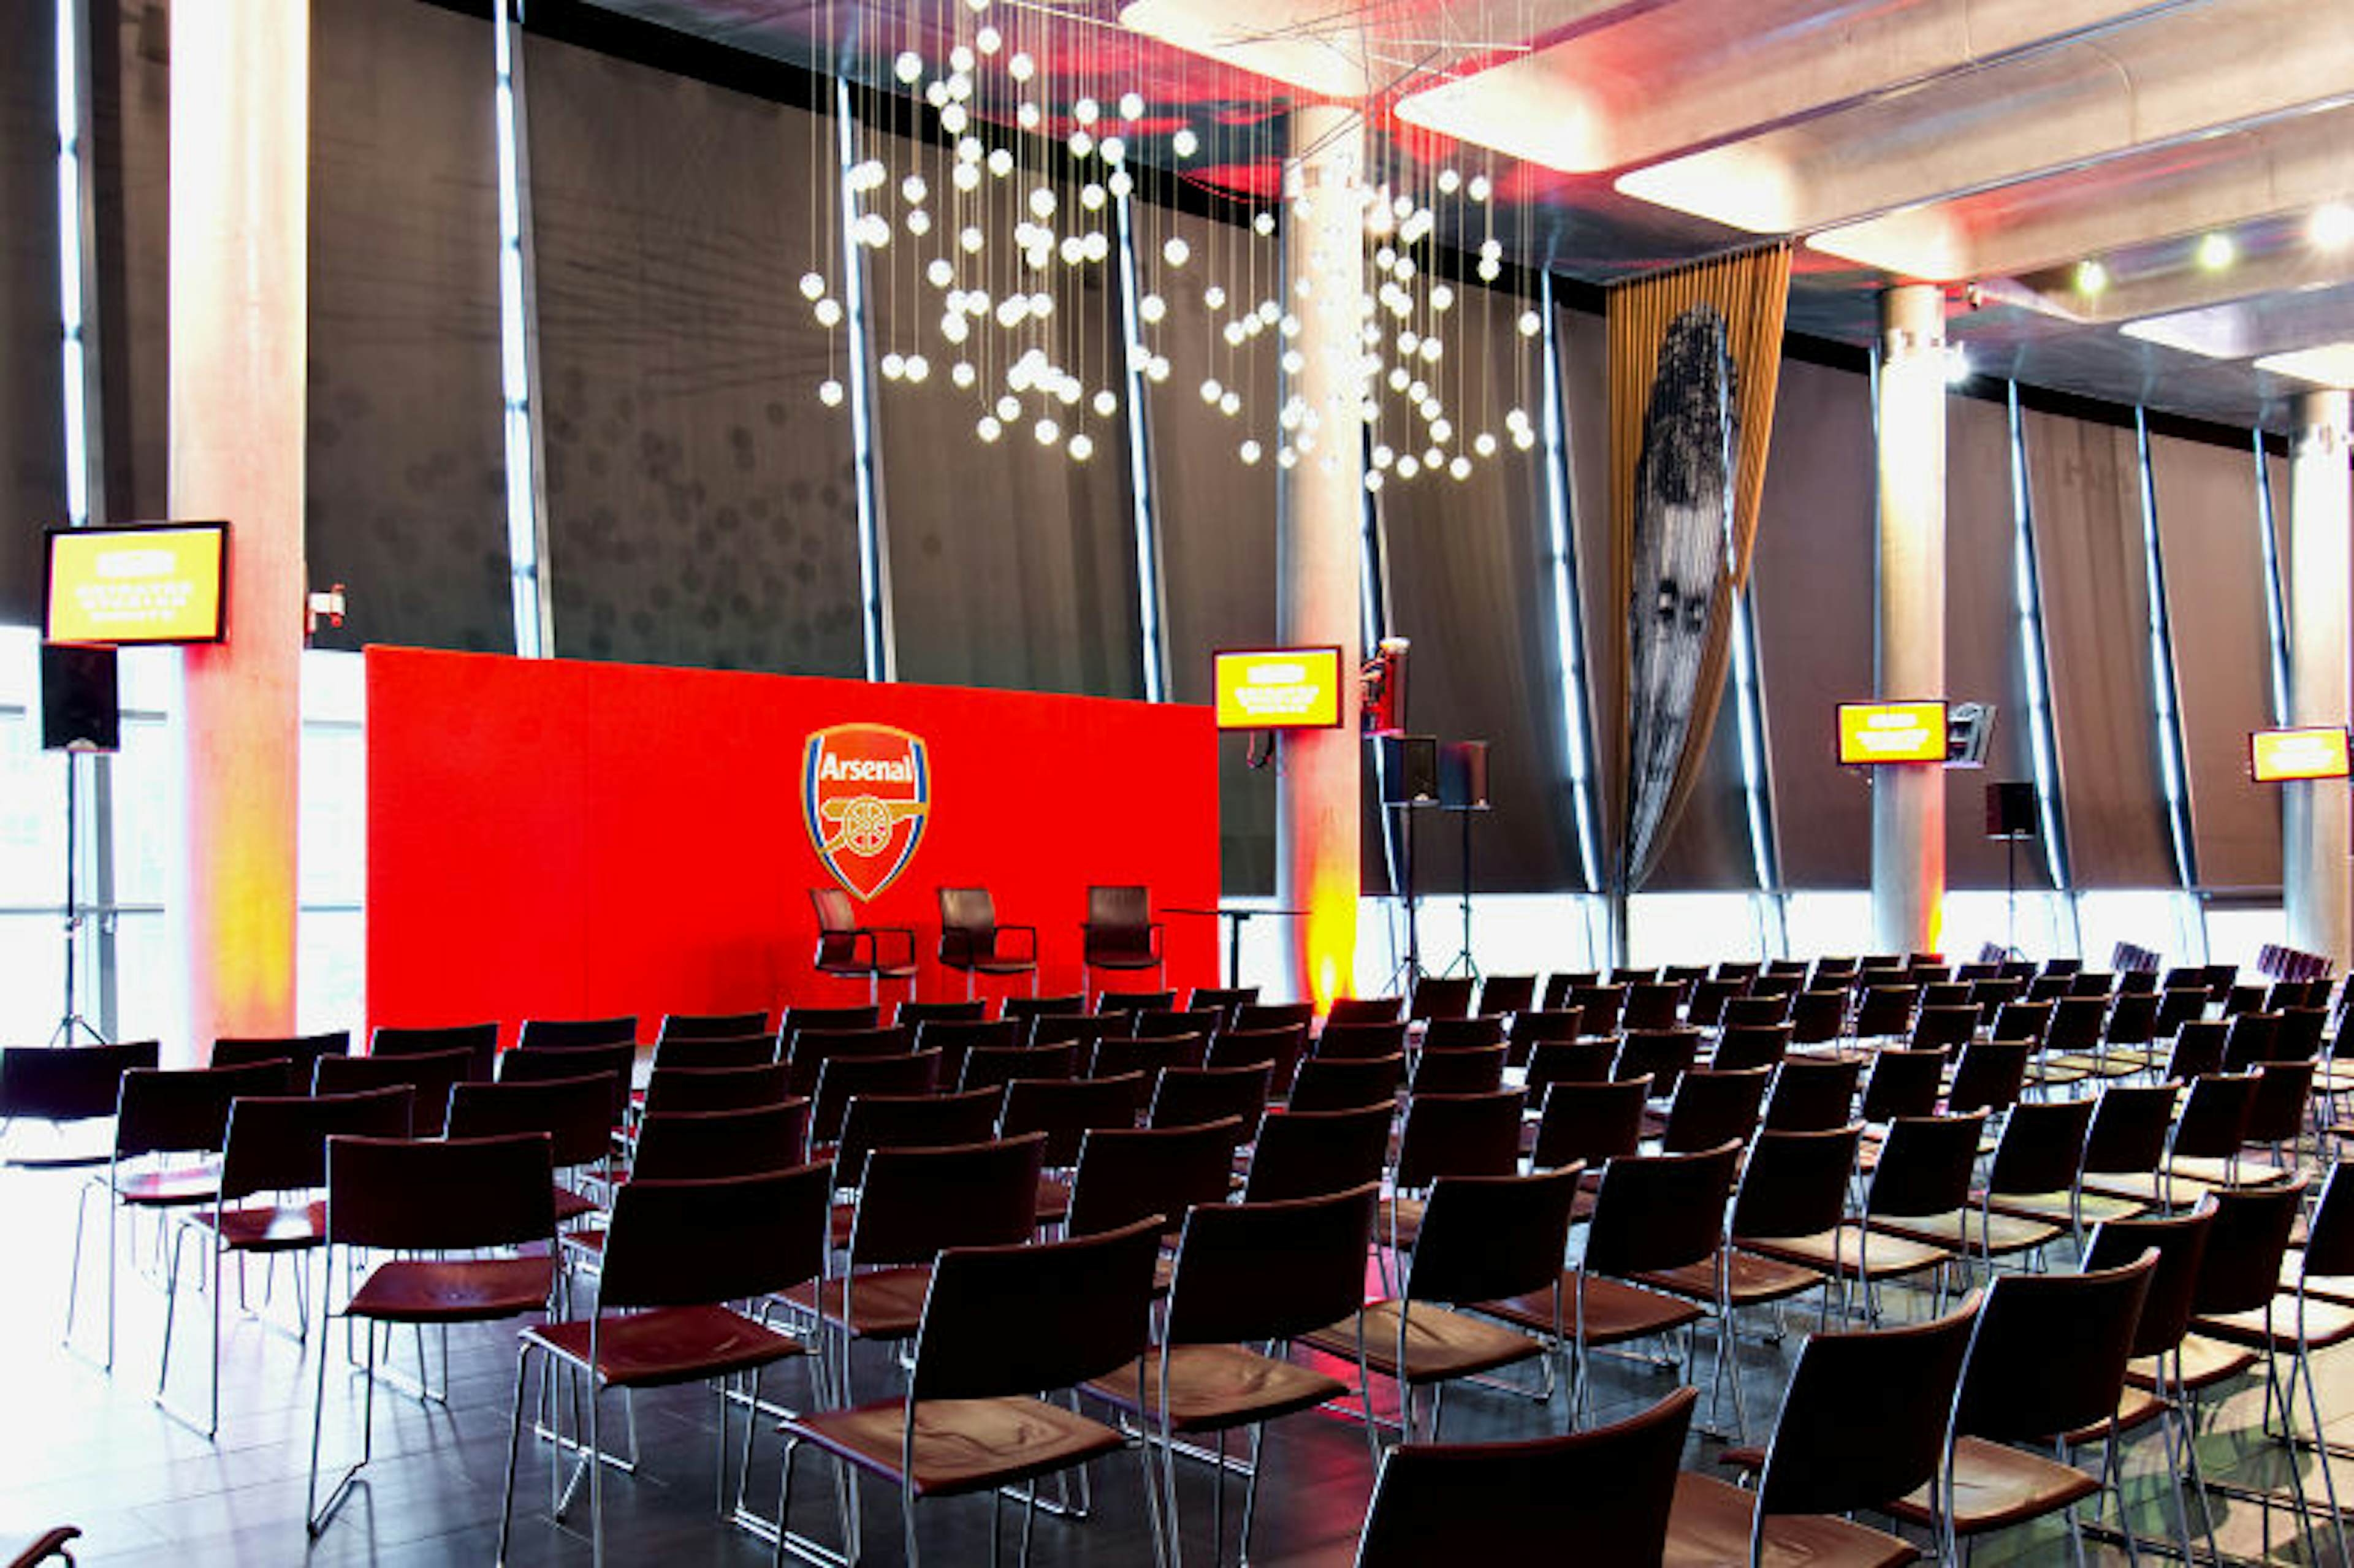 Arsenal Football Club - Emirates Stadium - image 3